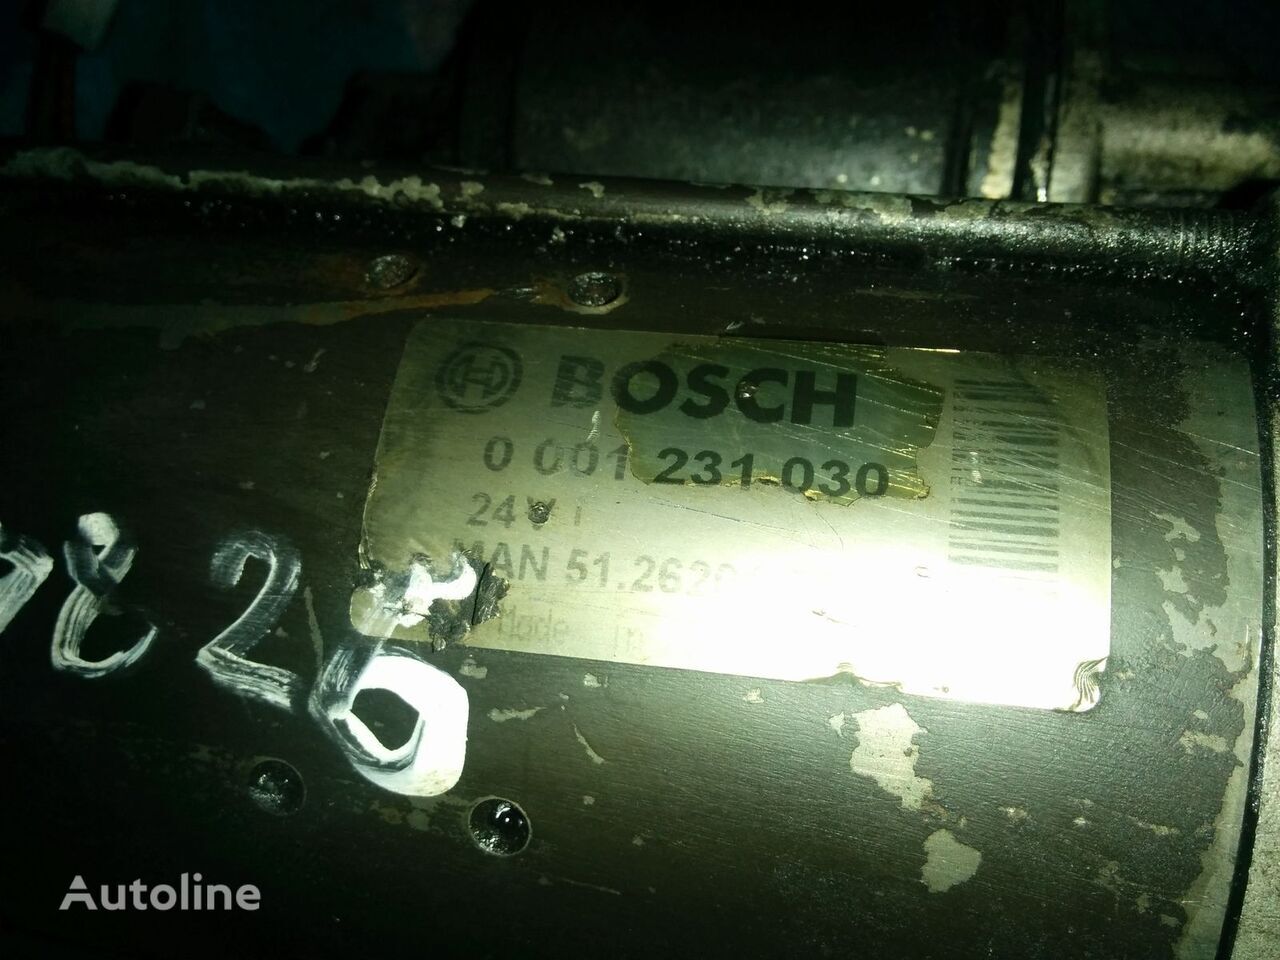 Bosch 0001231-030 / 51.262017213   MAN 0826 leasing Bosch 0001231-030 / 51.262017213   MAN 0826: picture 4